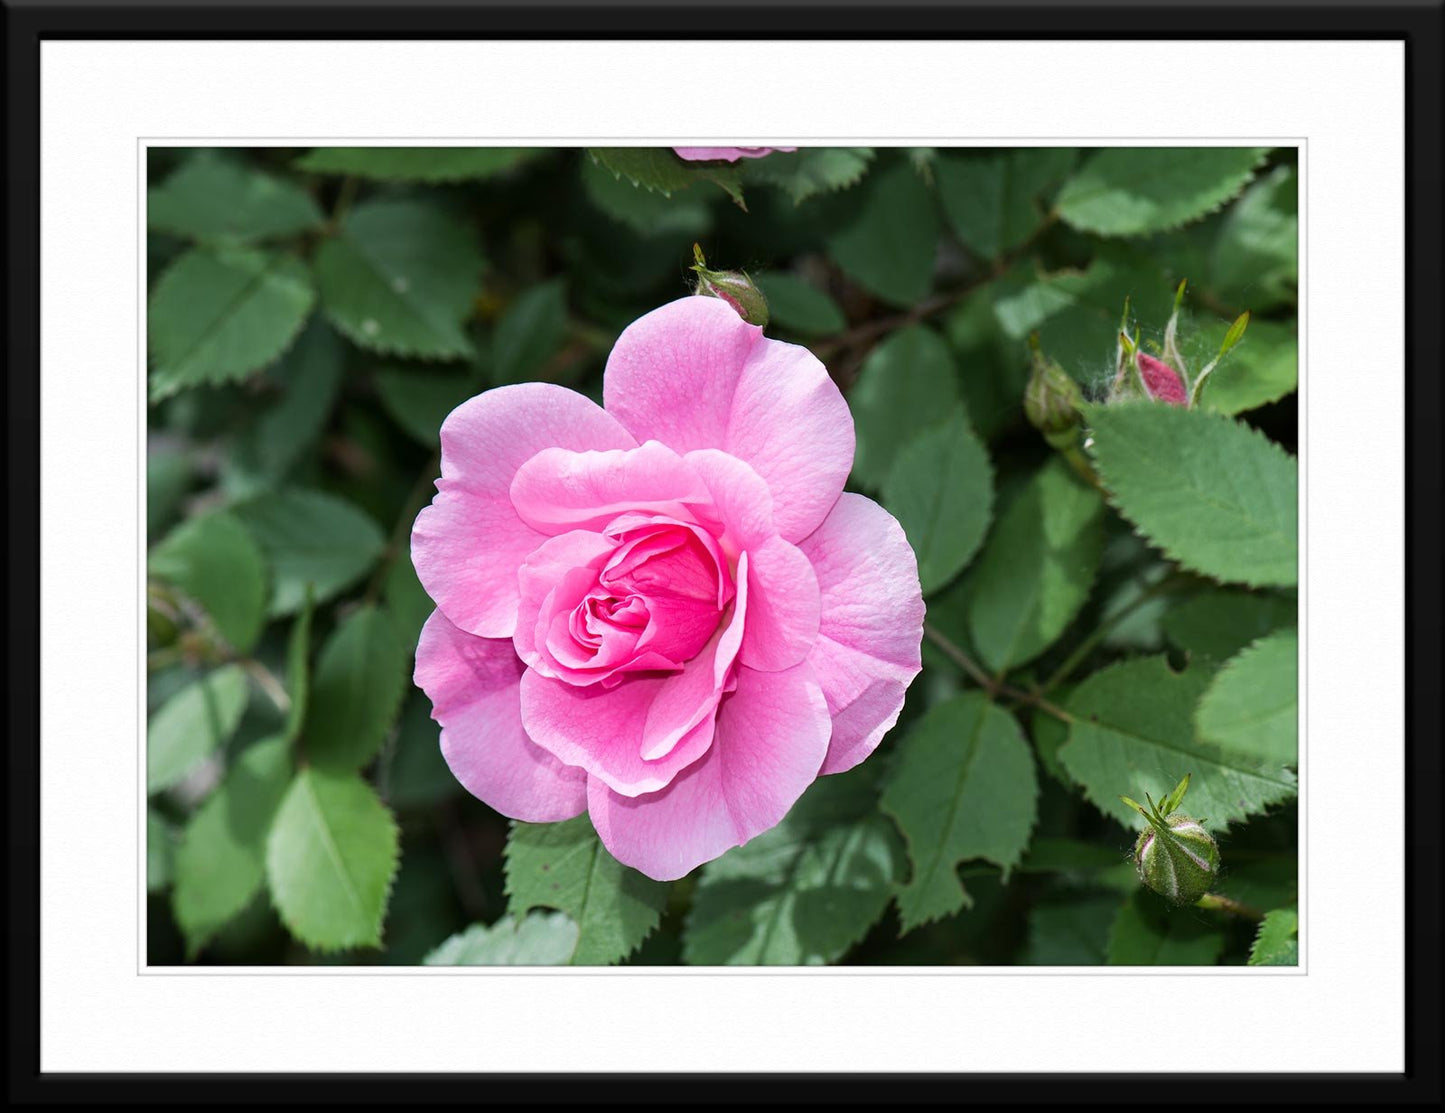 Captivating pink rose photograph